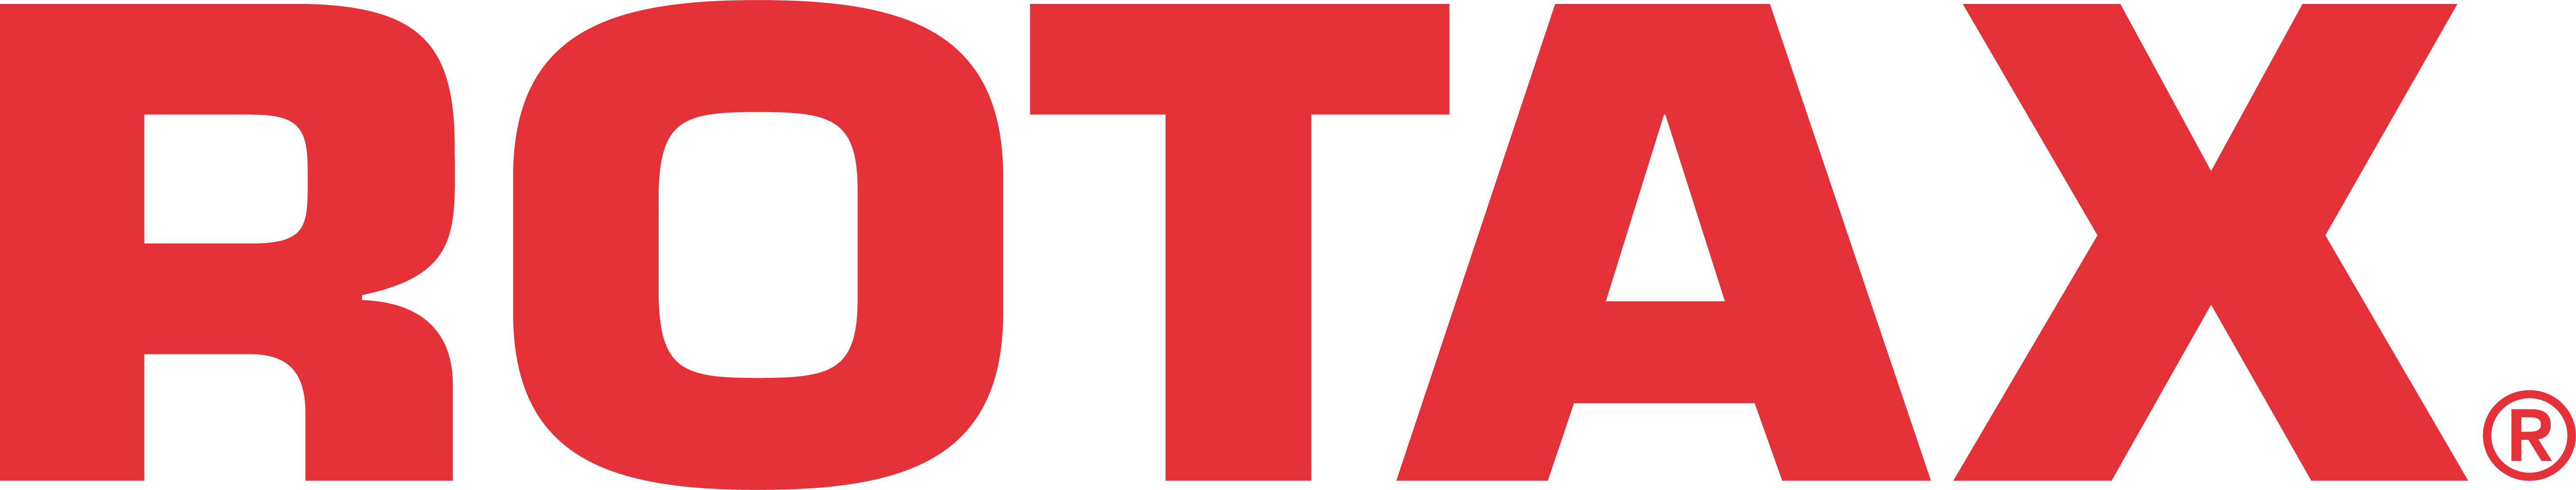 Rotax Logo_Red